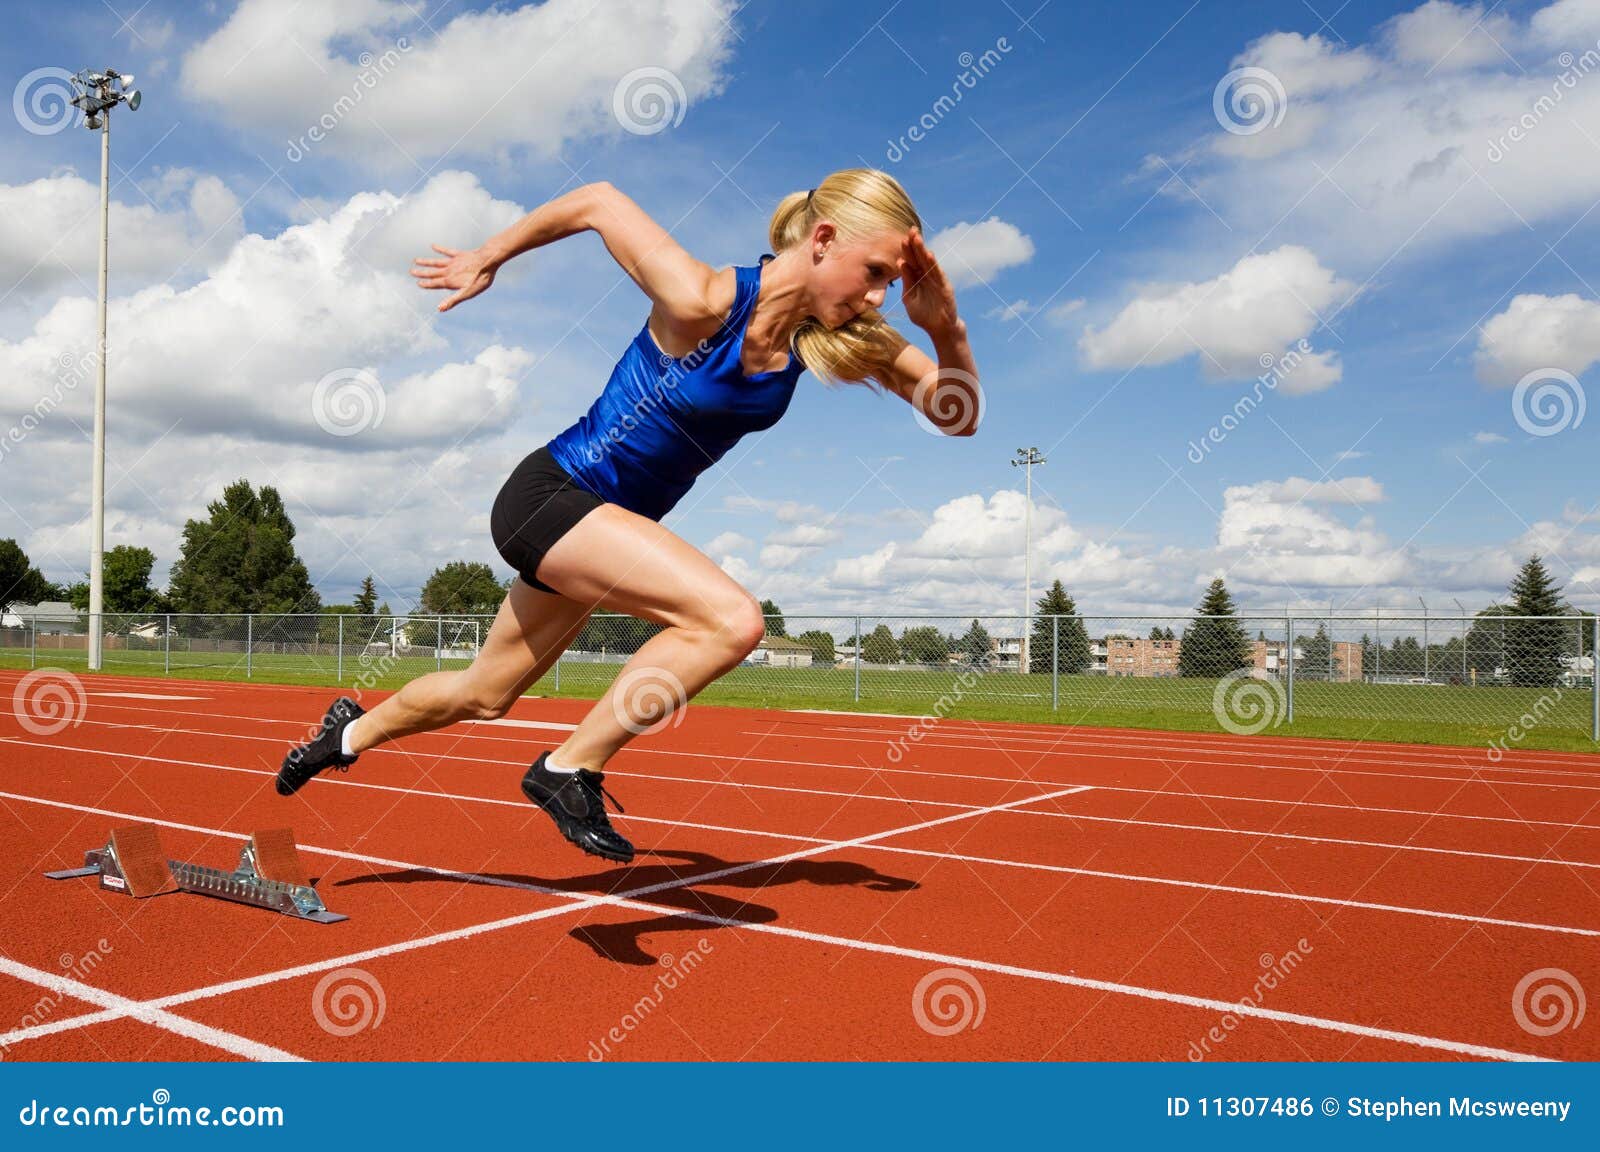 track athlete